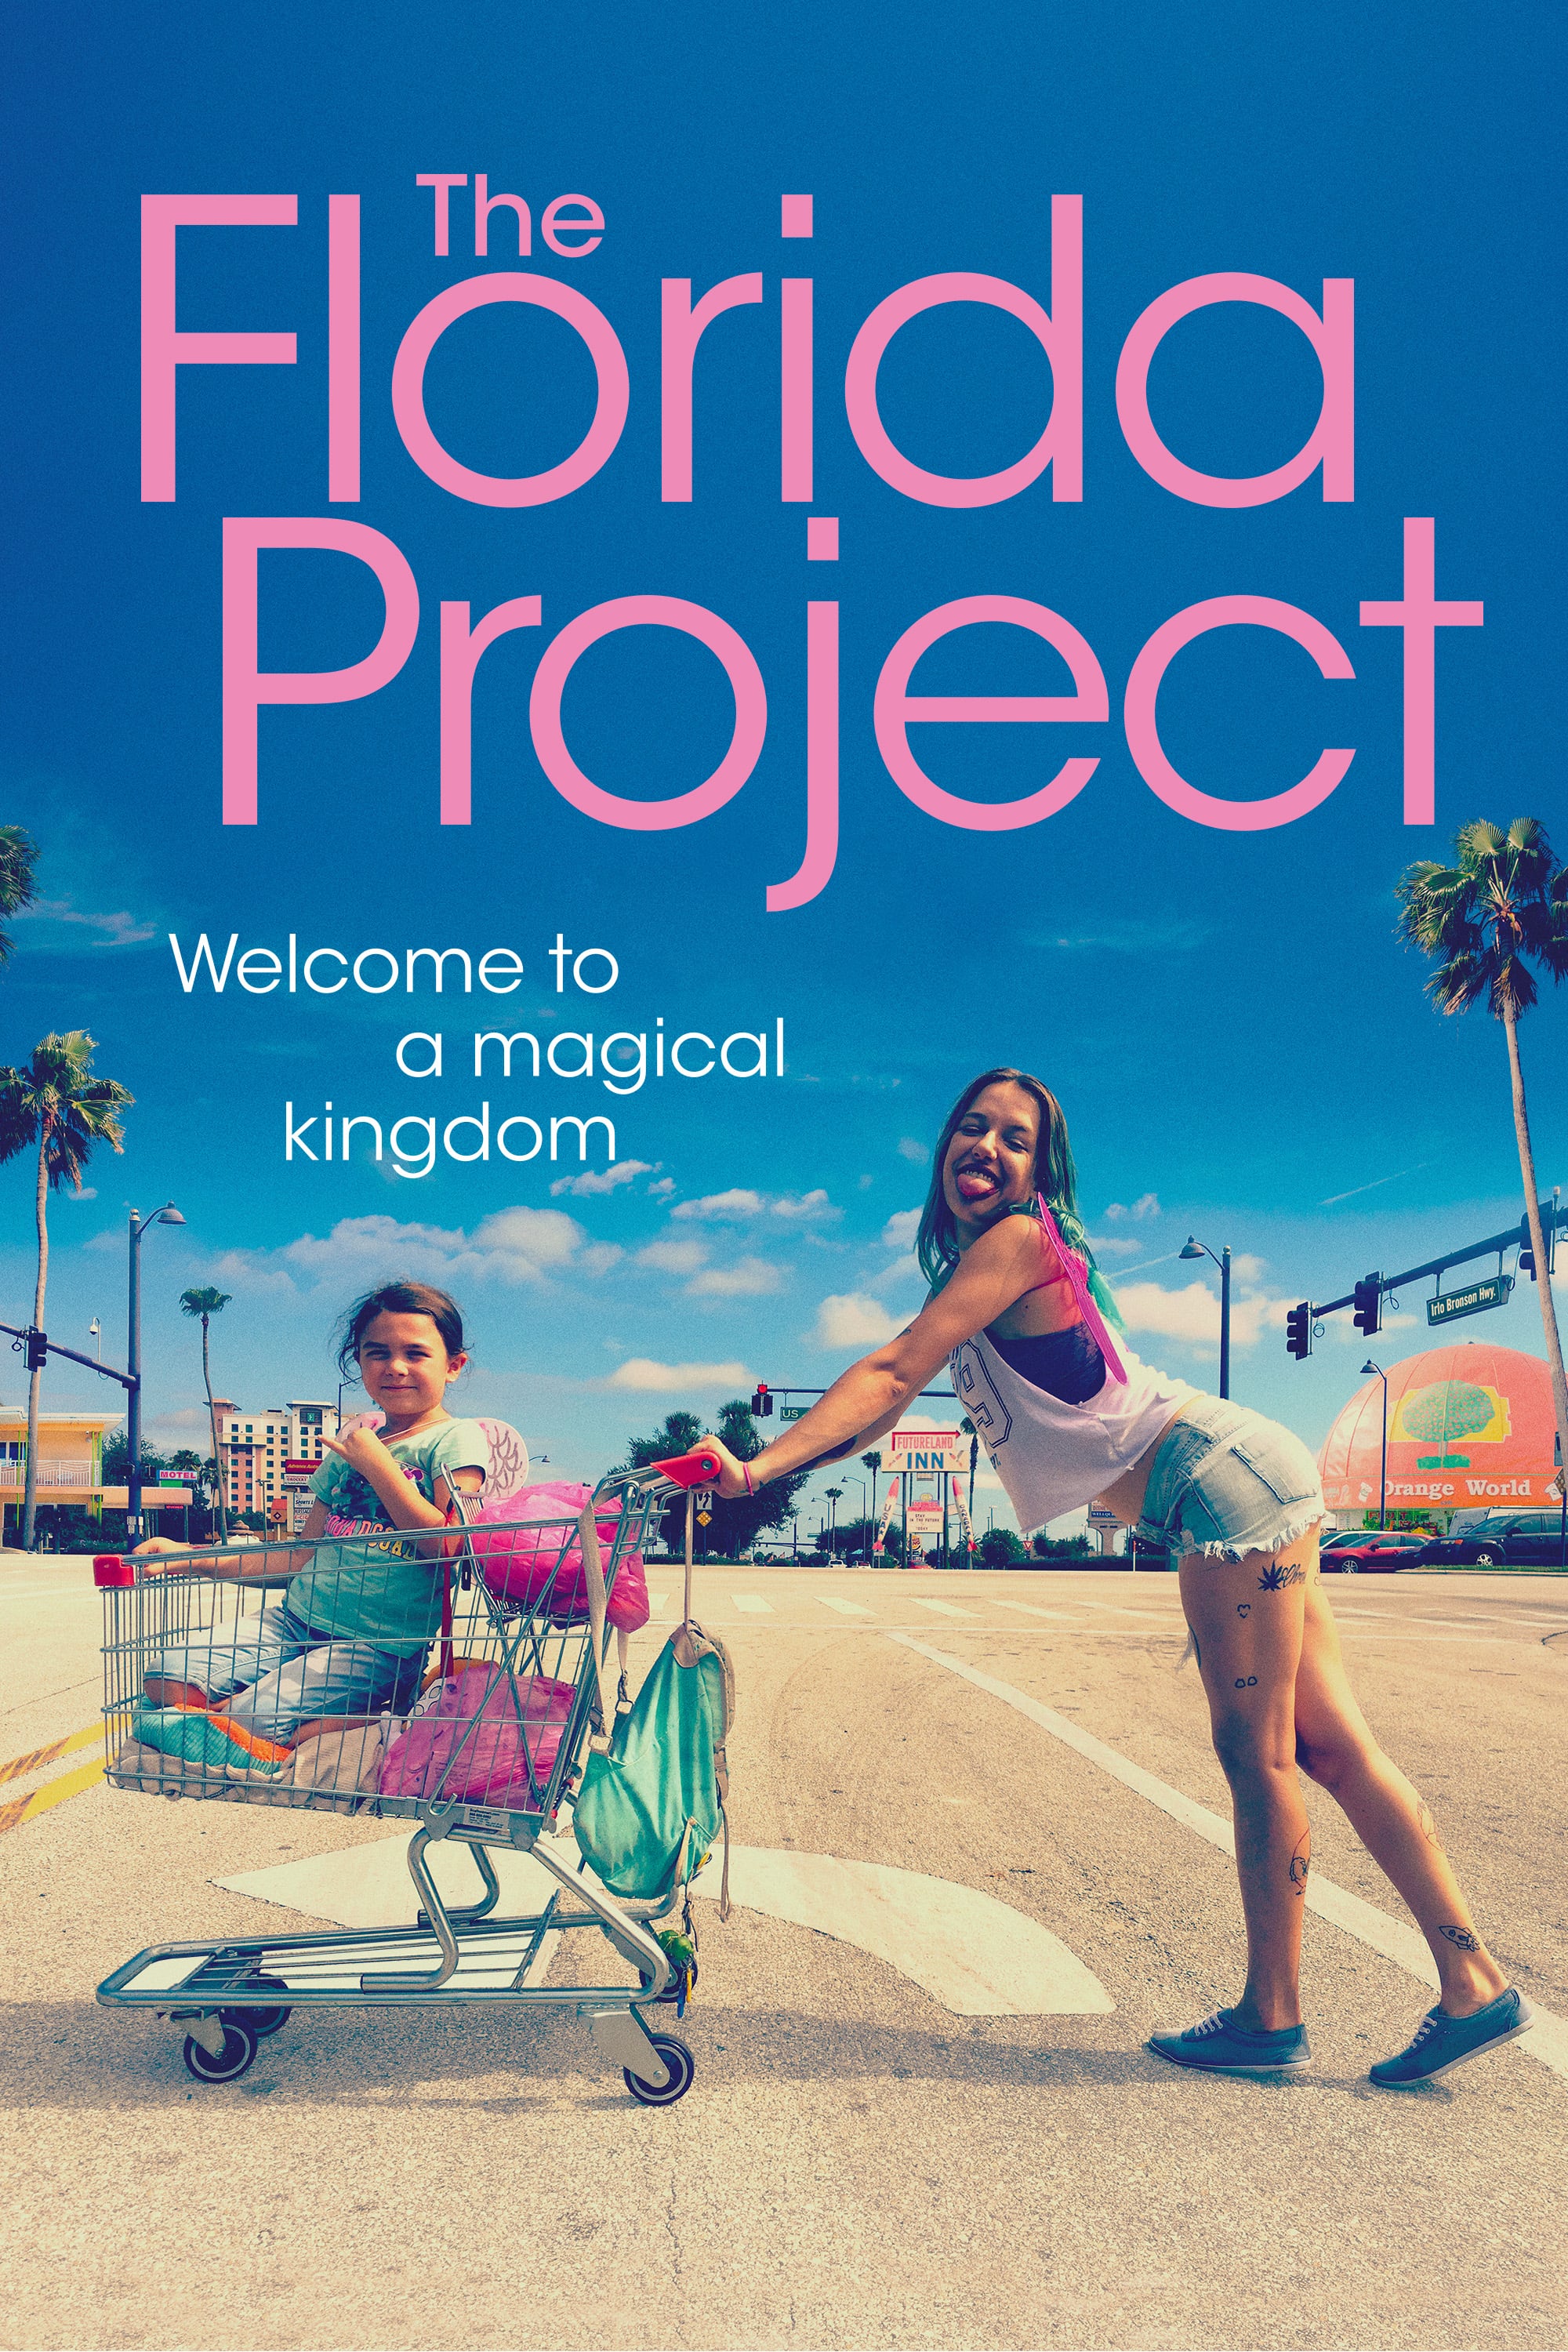 Plakat von "The Florida Project"